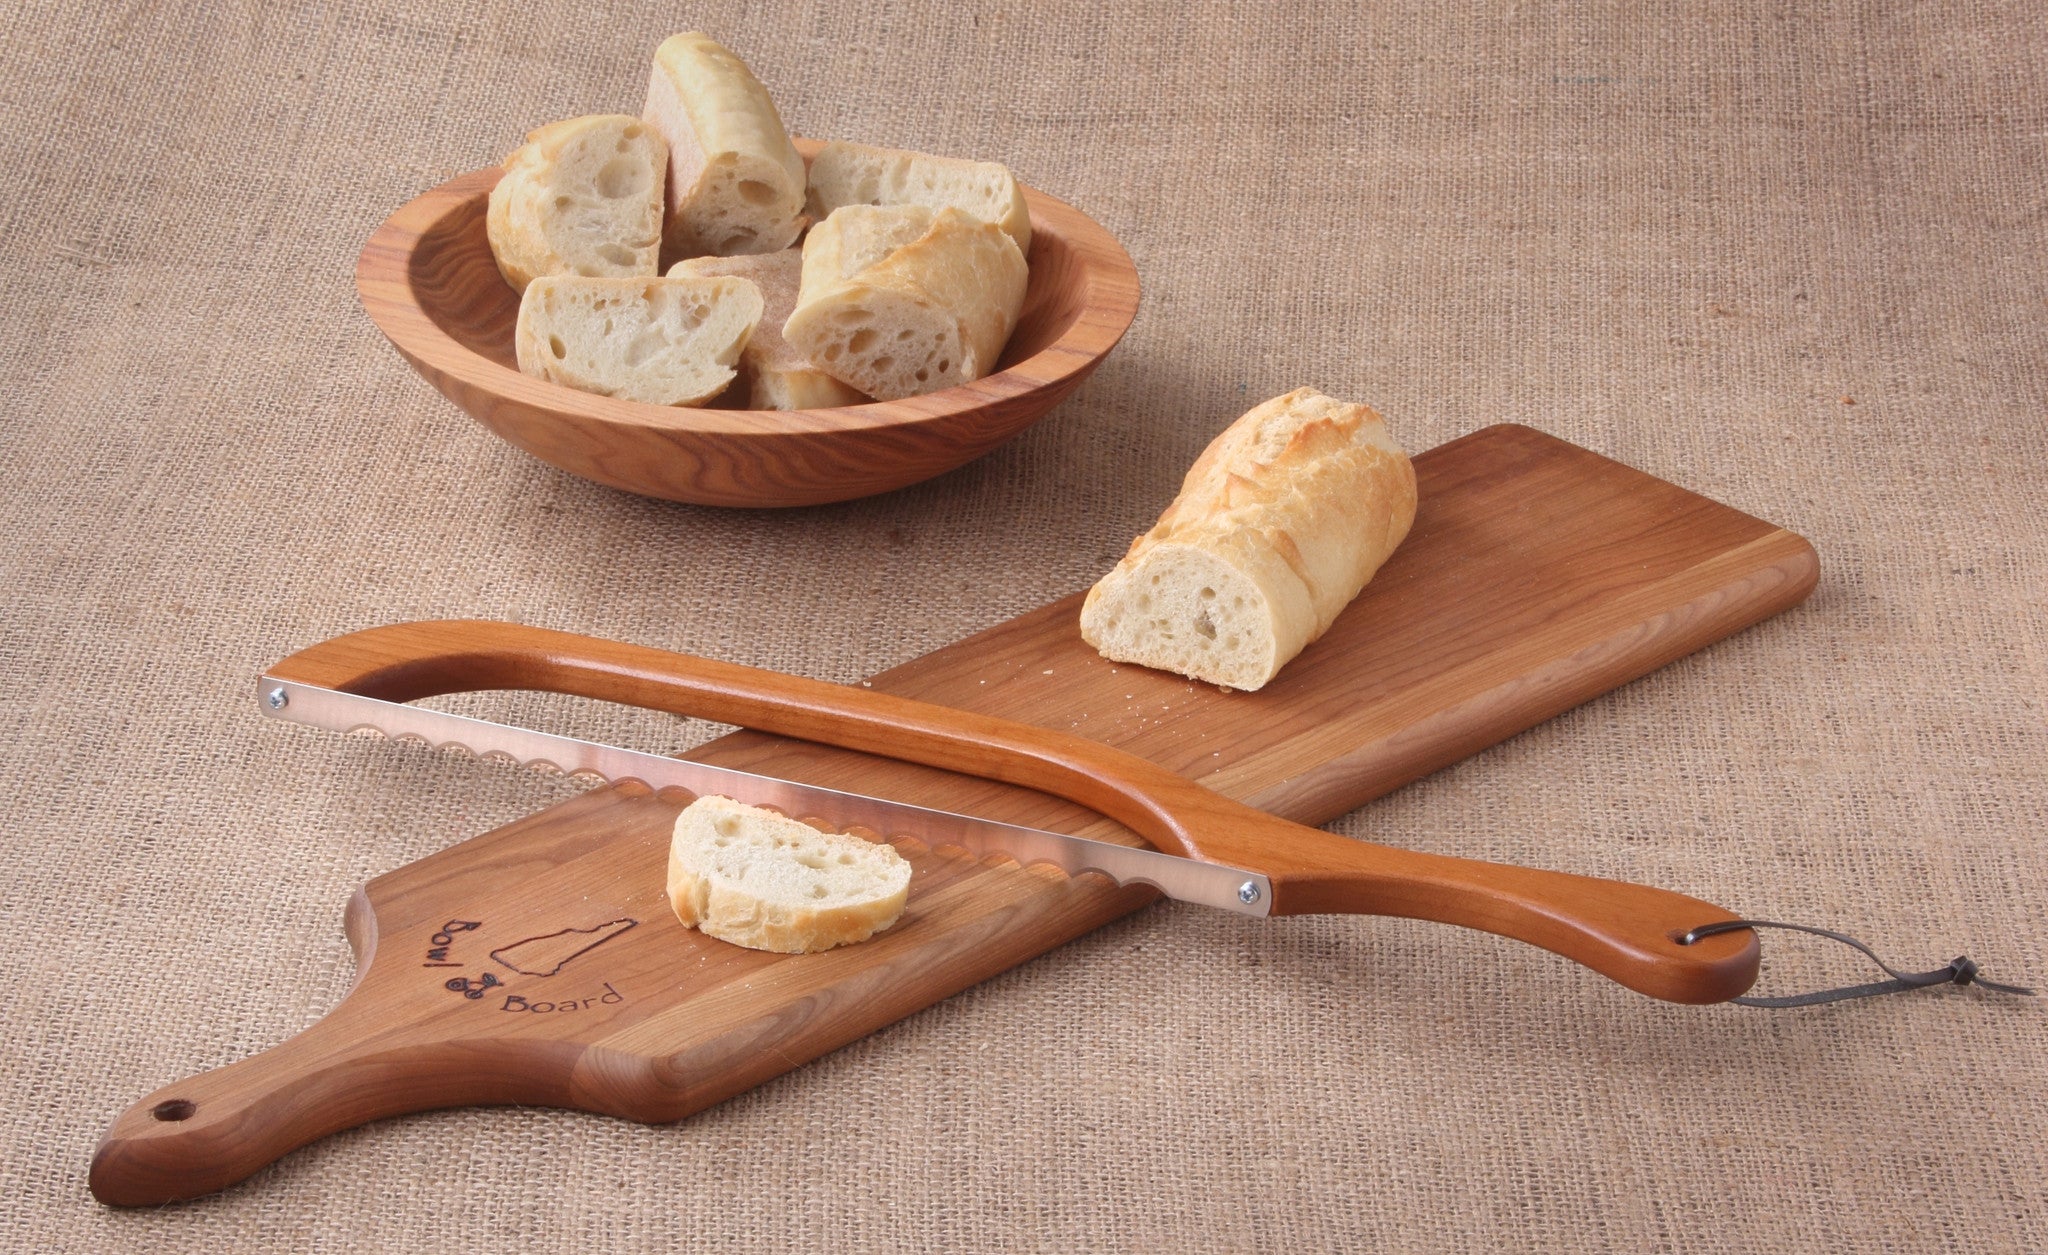 XL Maple fiddle bow bread knife bread saw